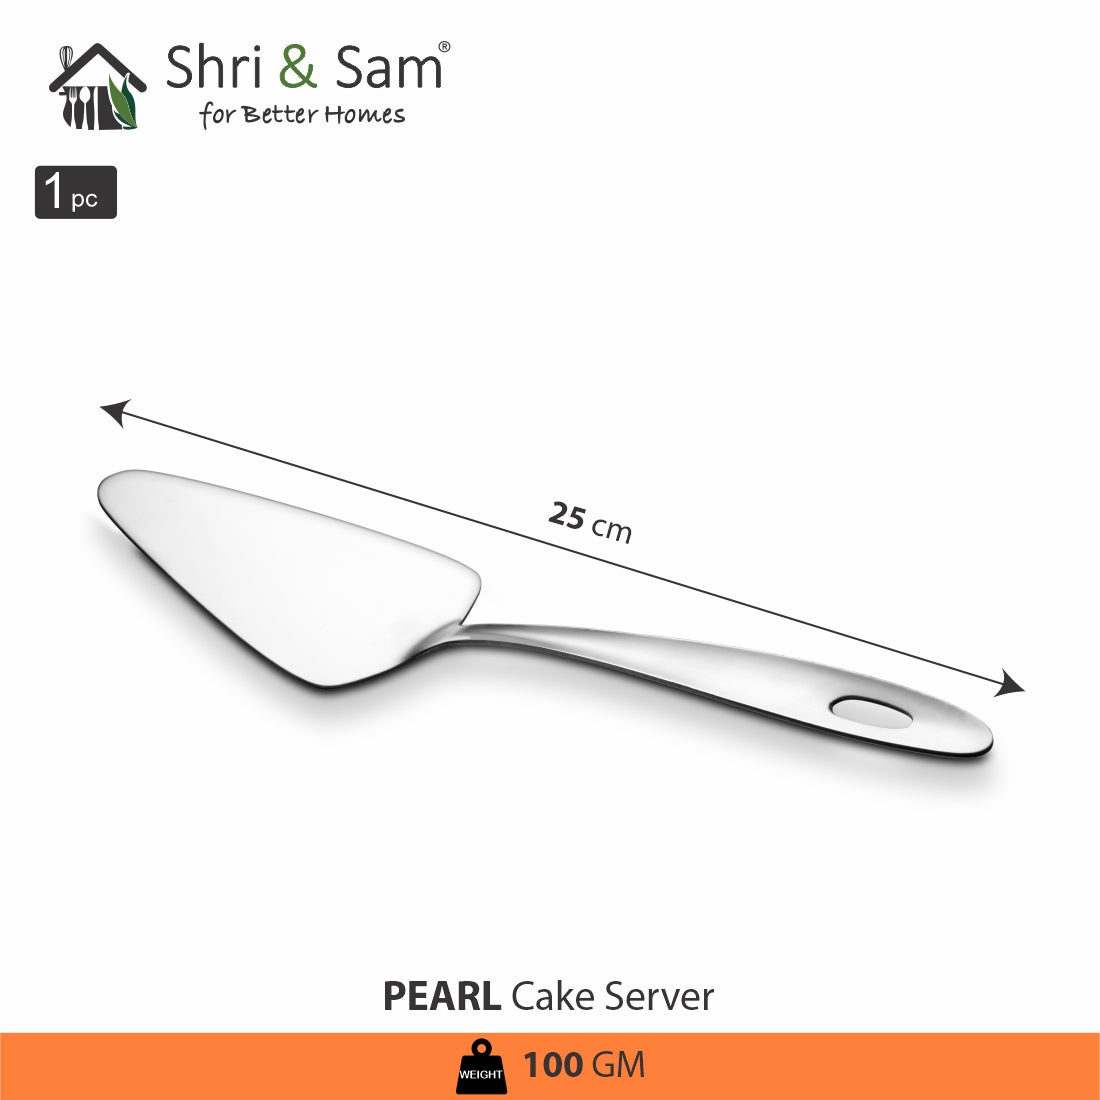 Stainless Steel Cake Server Pearl